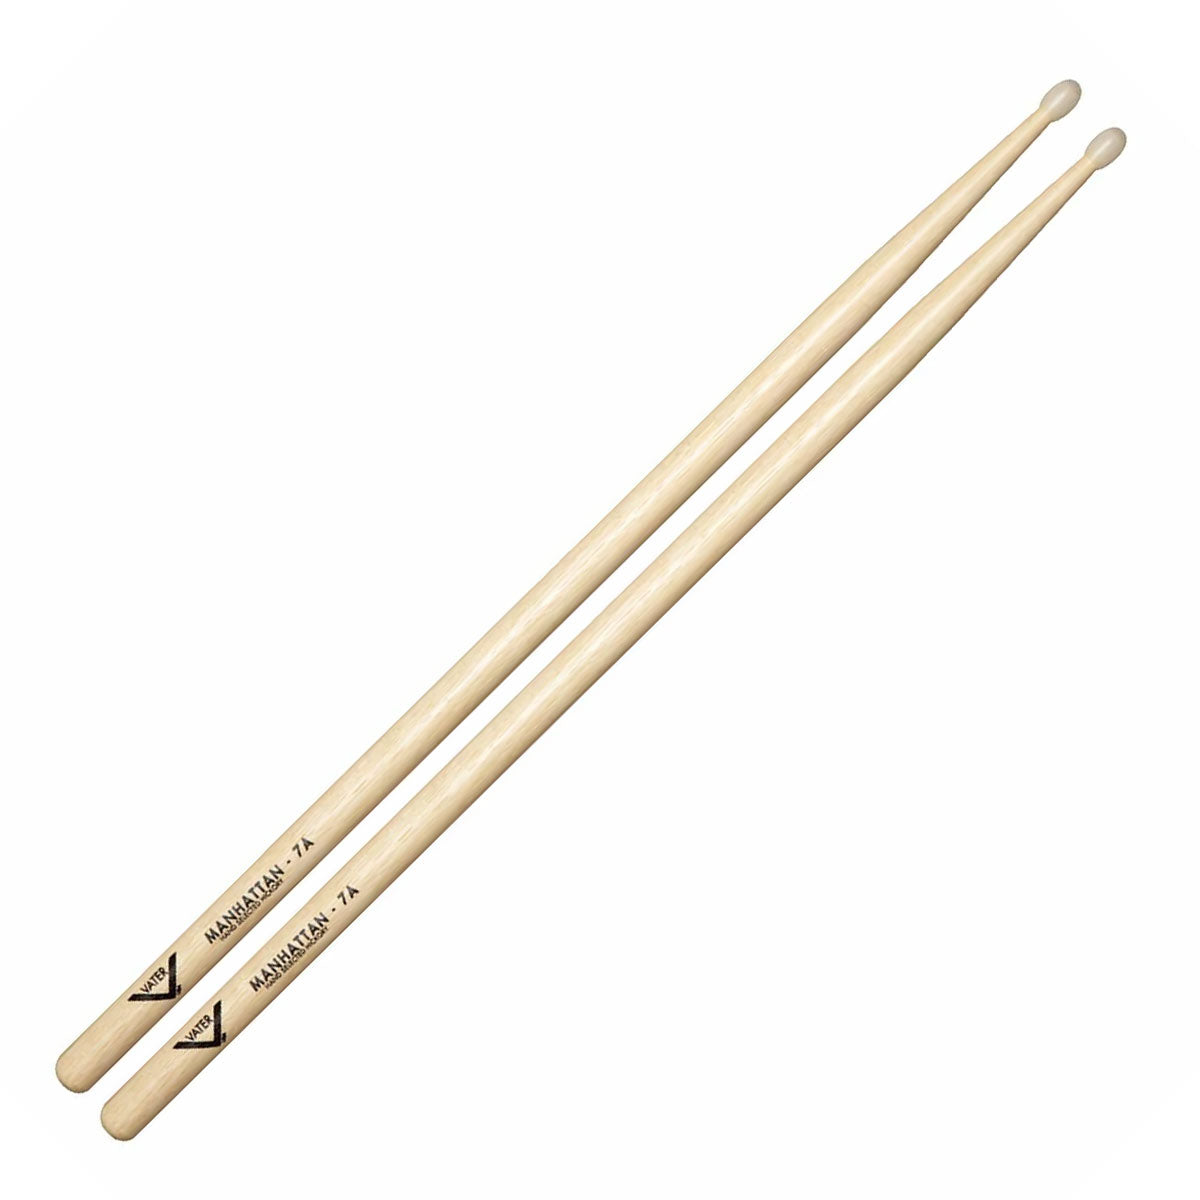 Vater Traditional 7A Nylon Tip Drumsticks